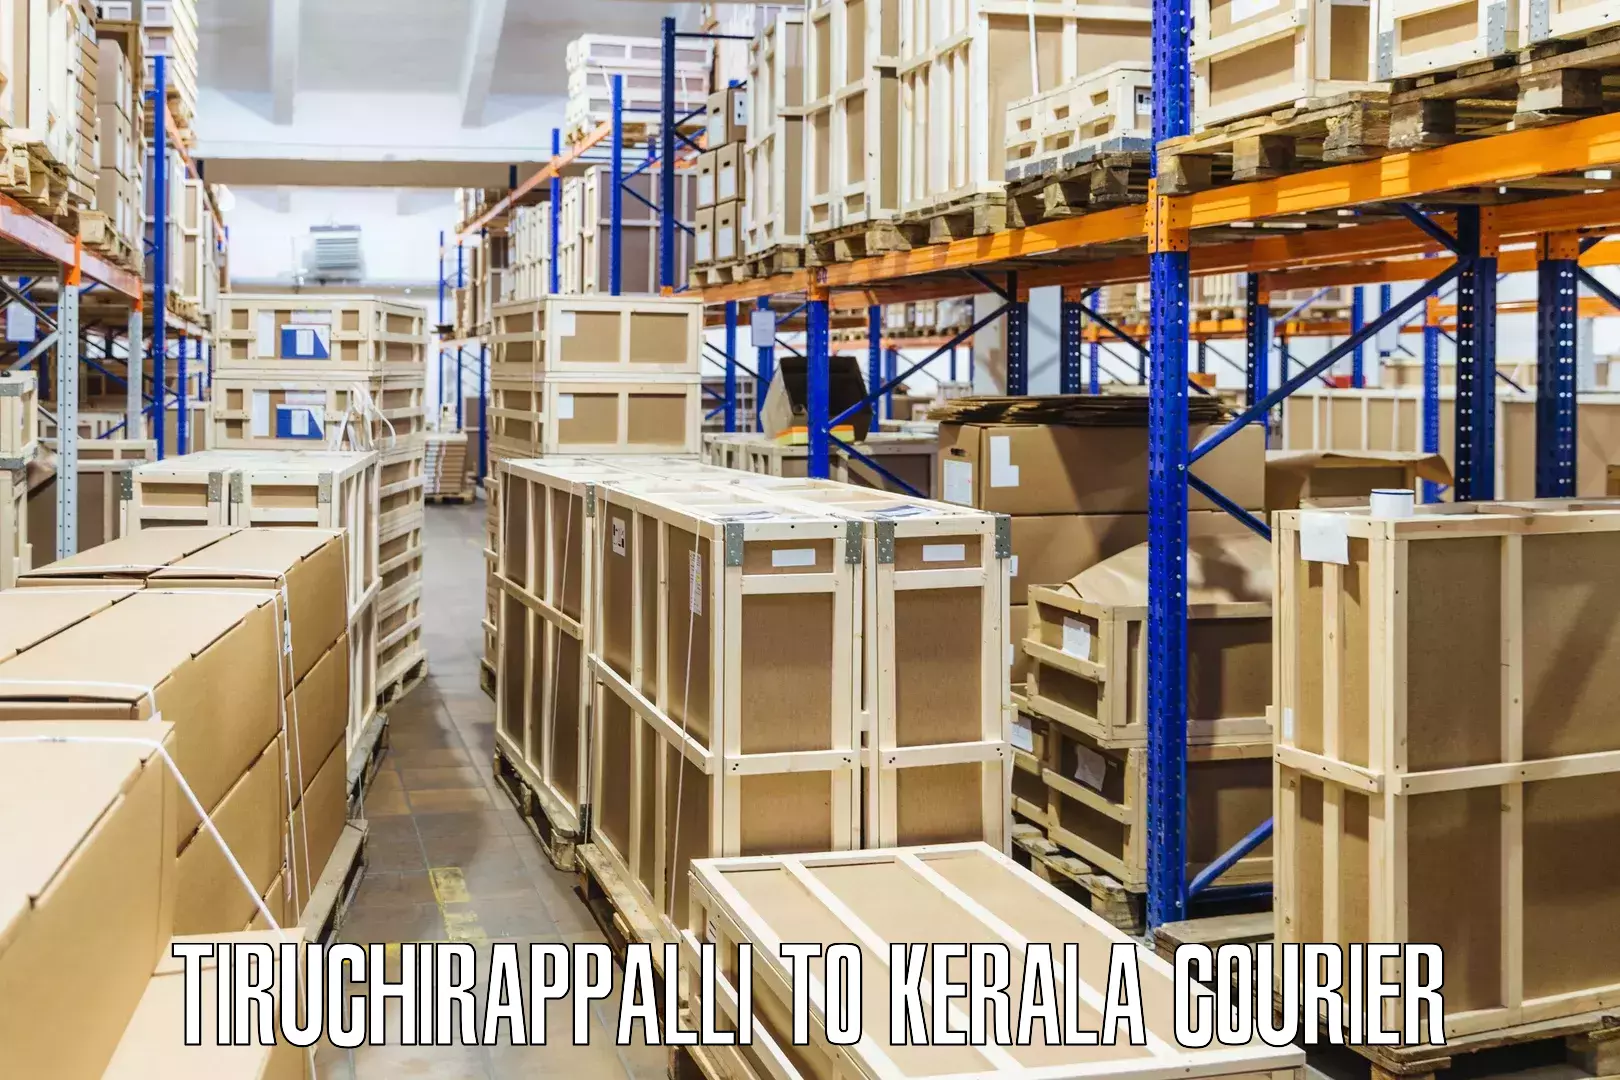 Enhanced tracking features in Tiruchirappalli to Kodungallur